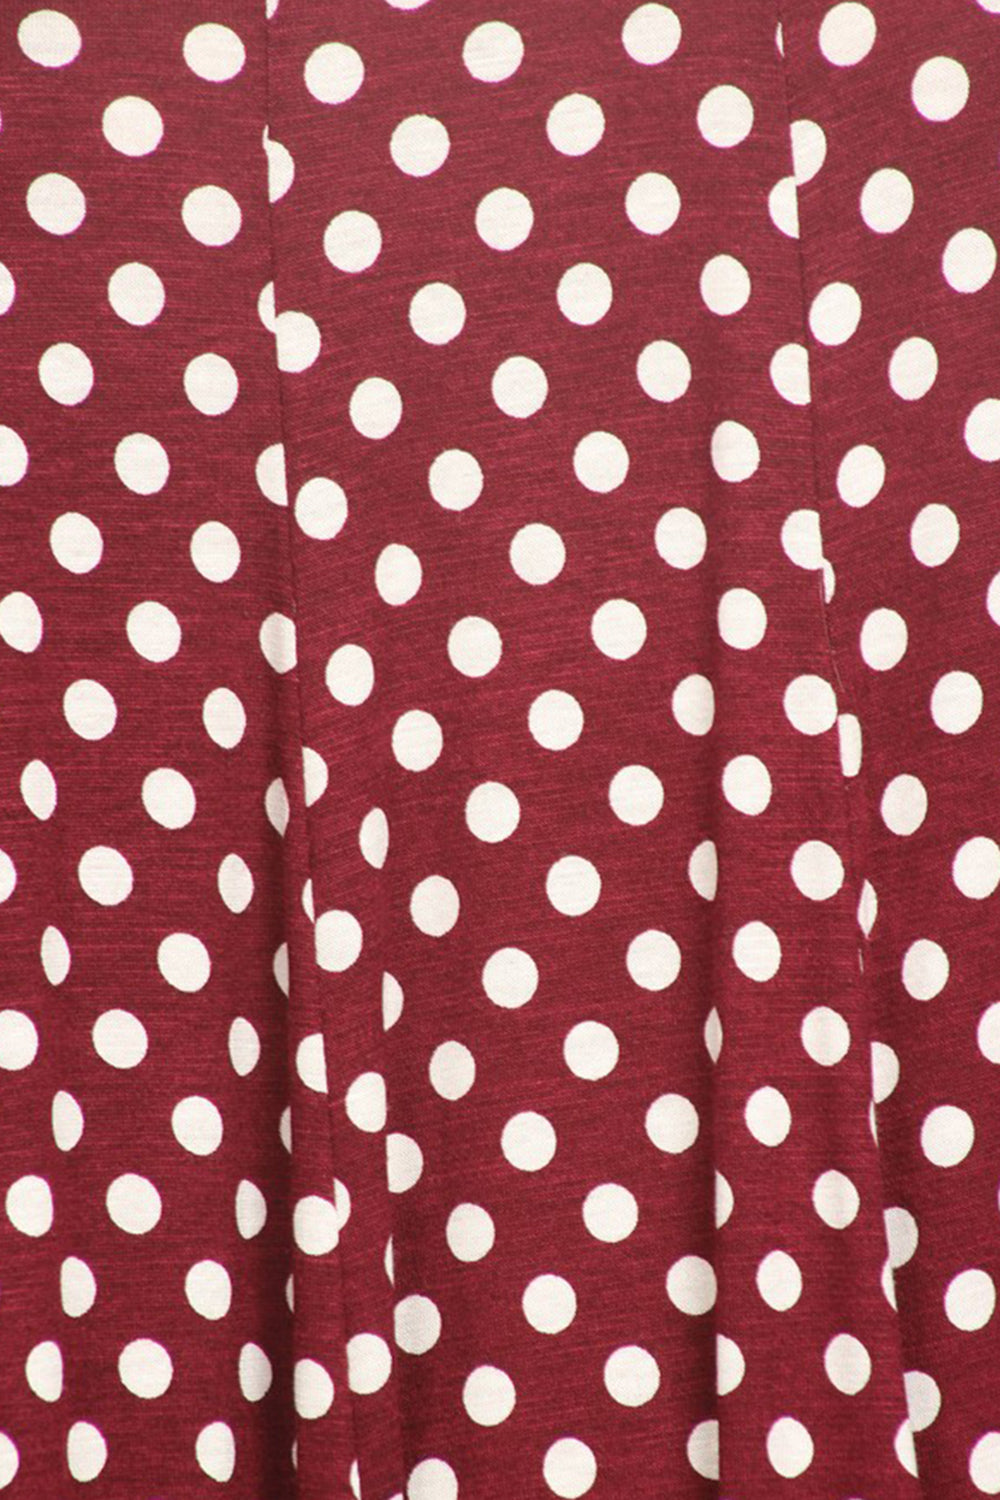 Women's Scoop Neck 3/4 Sleeve Polka Dot Patterned A-Line Midi Dress - FashionJOA